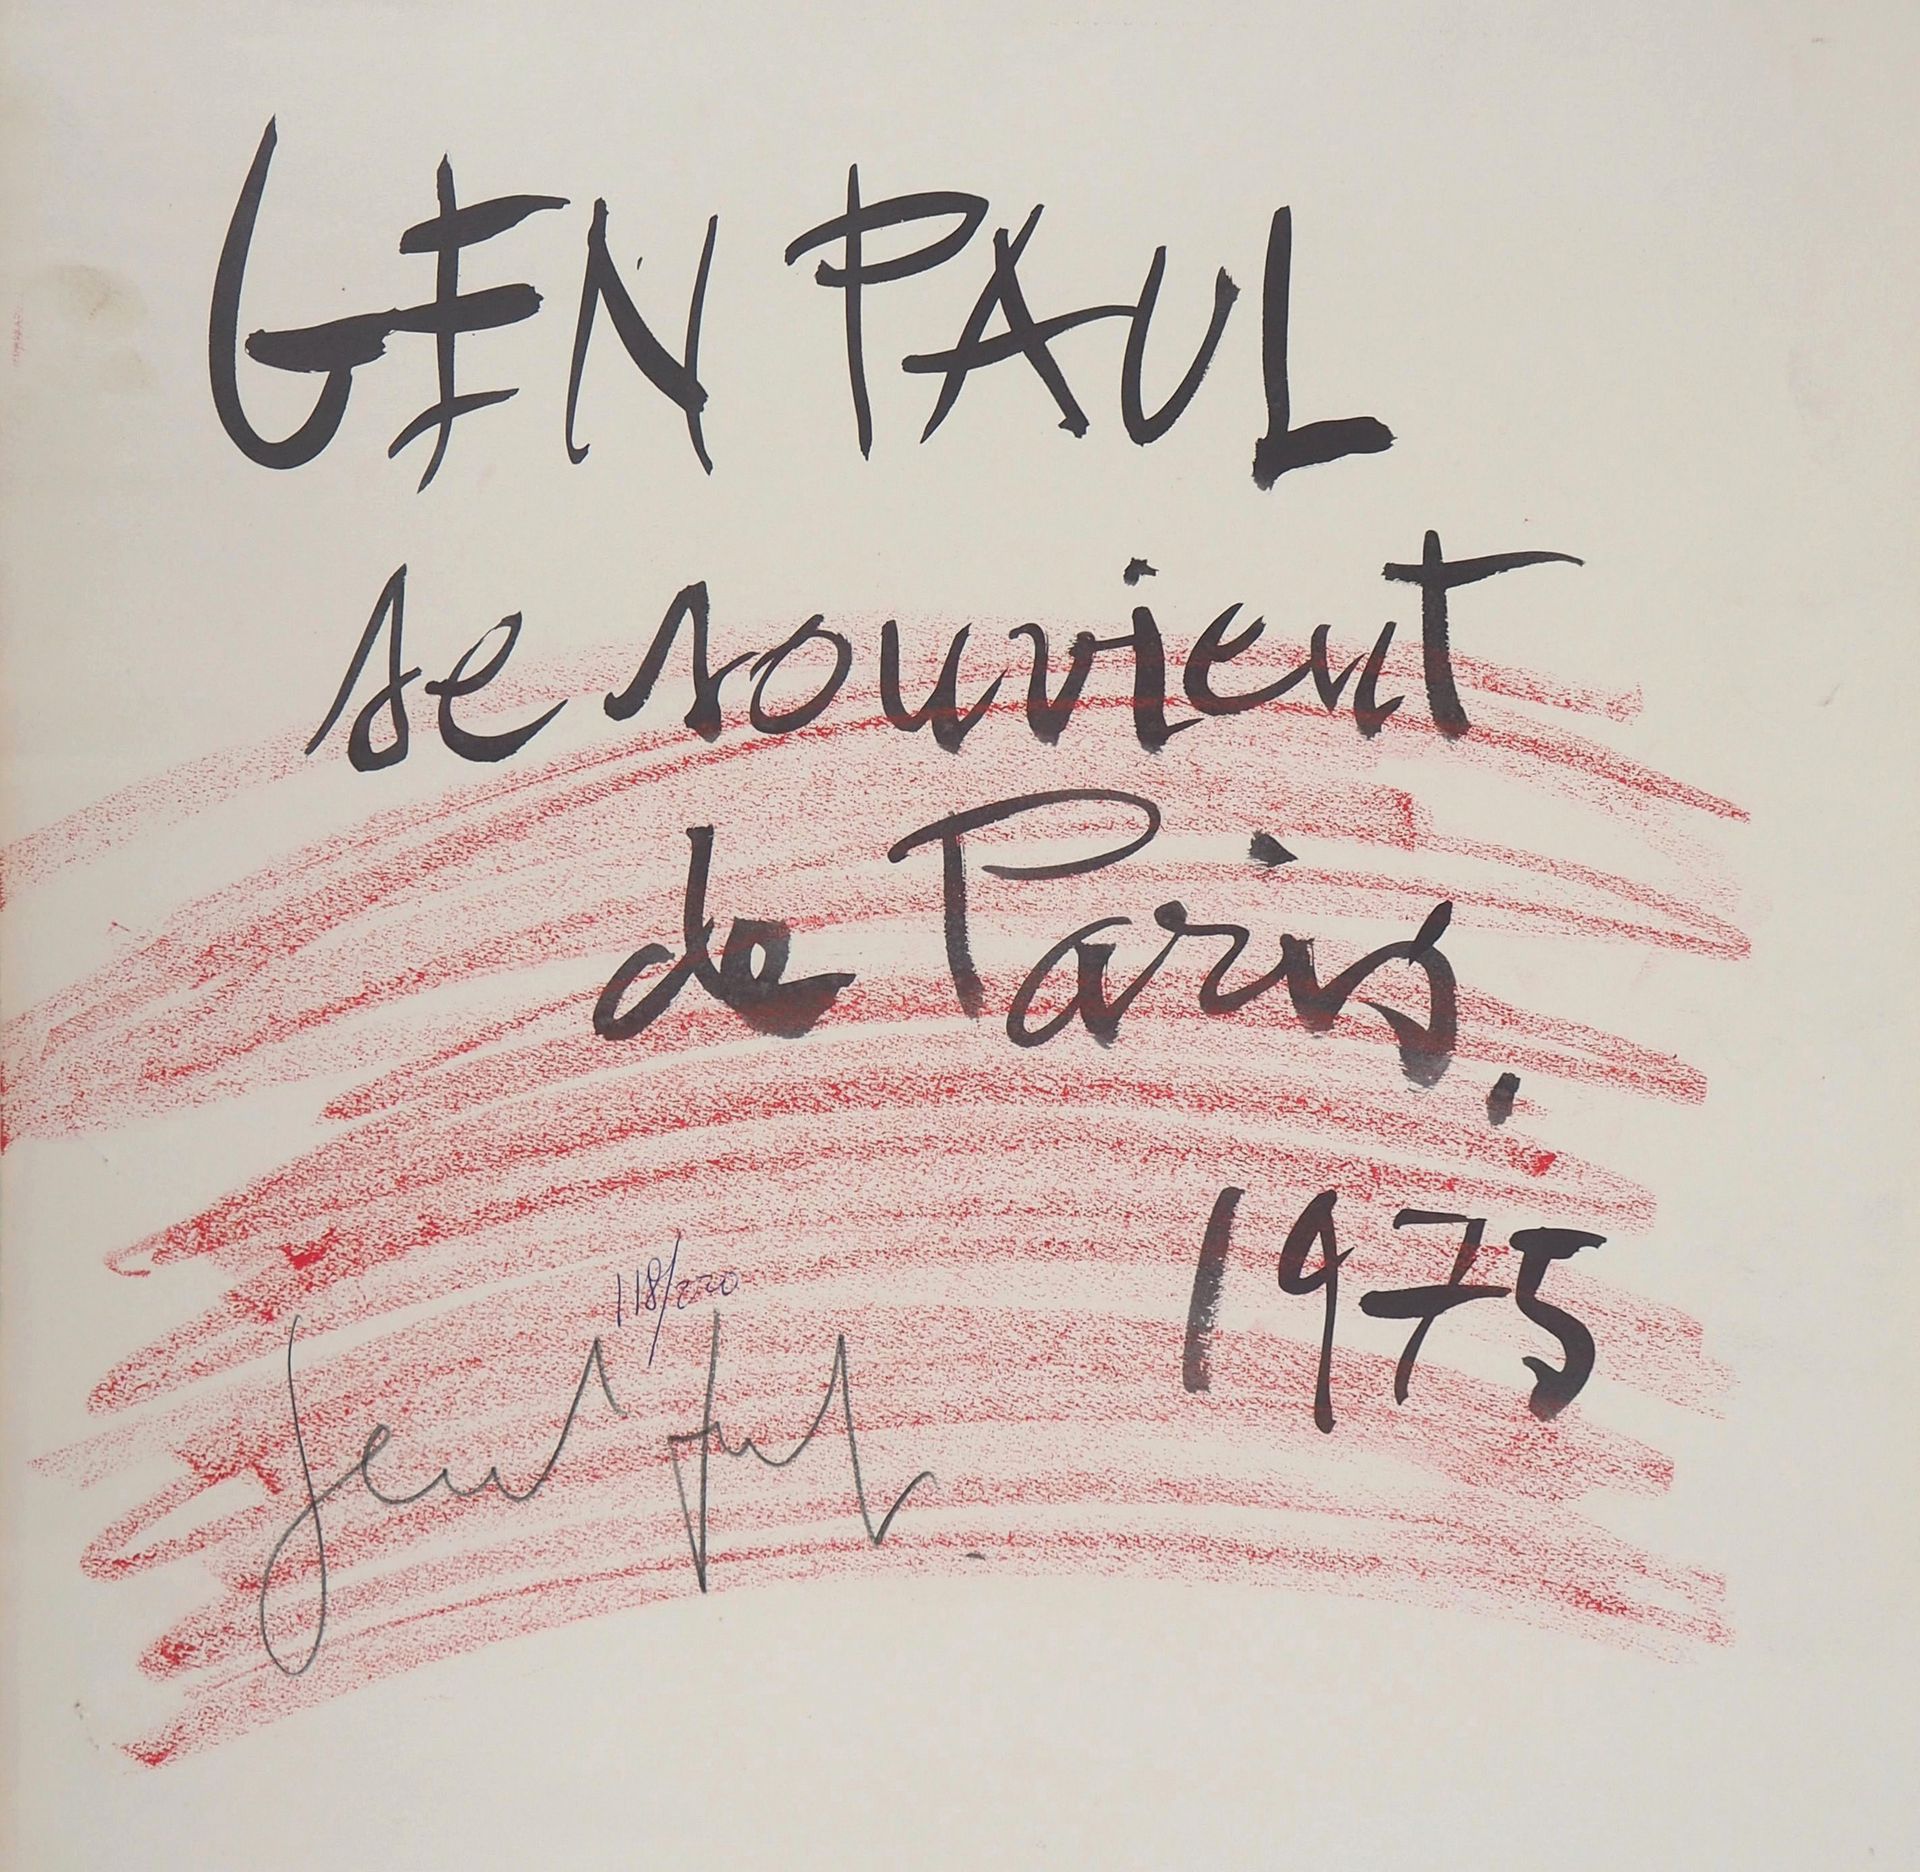 GEN PAUL Gen PAUL

Ricorda Parigi, 1975

Acquaforte originale

Firmato a matita &hellip;